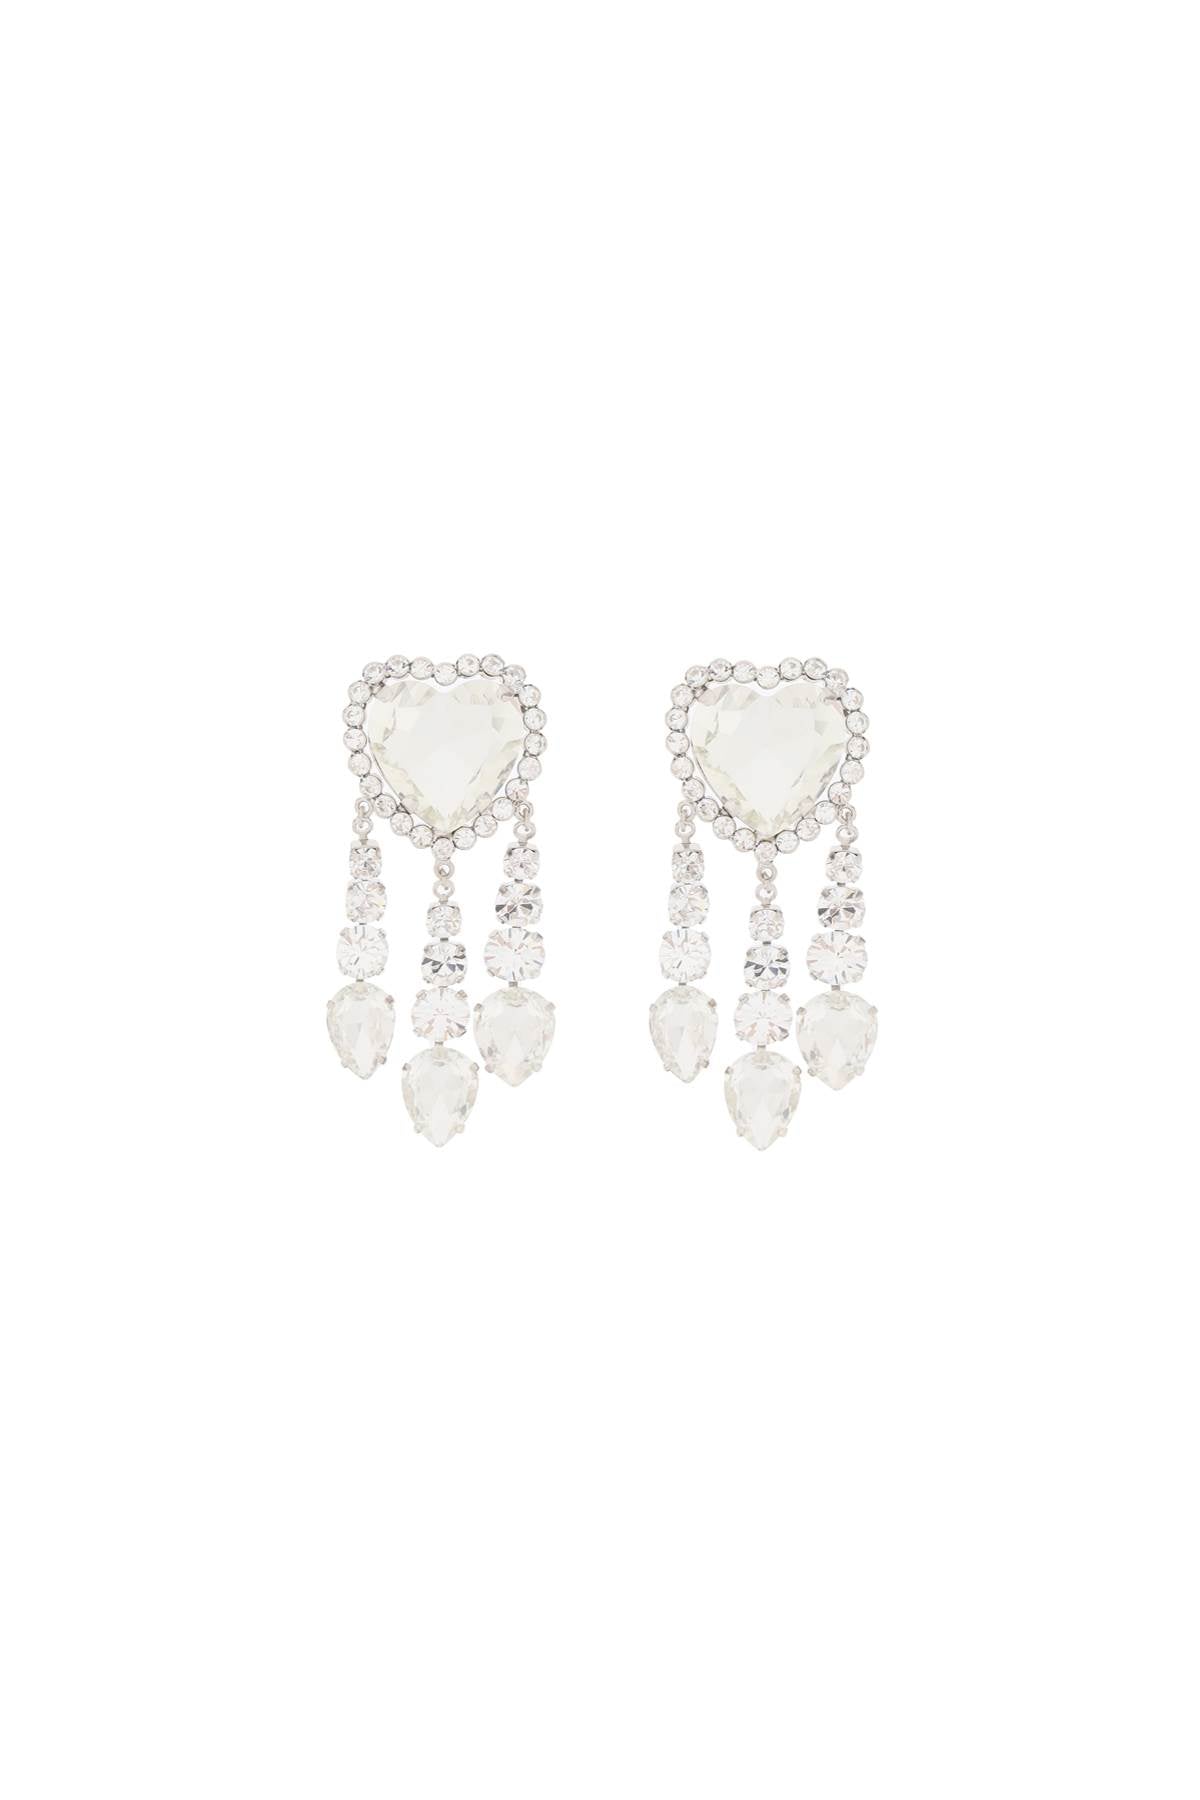 Alessandra Rich Alessandra rich heart earrings with pendants